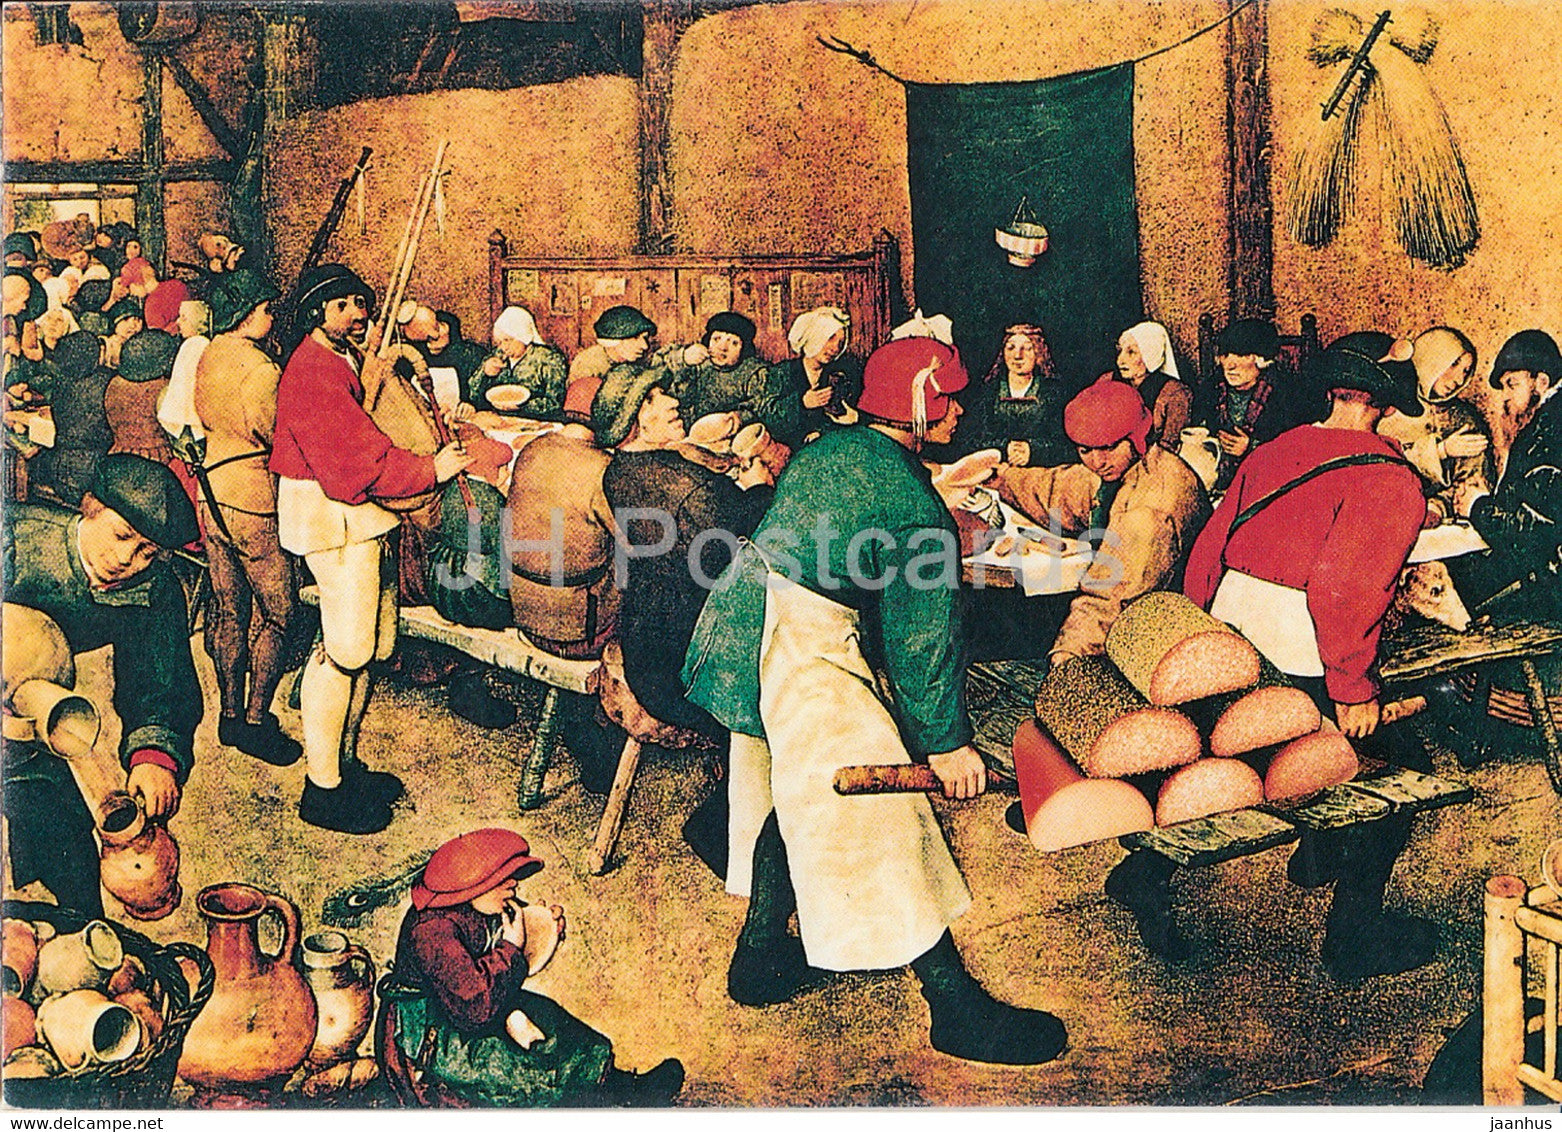 painting by Pieter Bruegel the Elder - Schulte Rohwurst - Dutch art - Germany - unused - JH Postcards